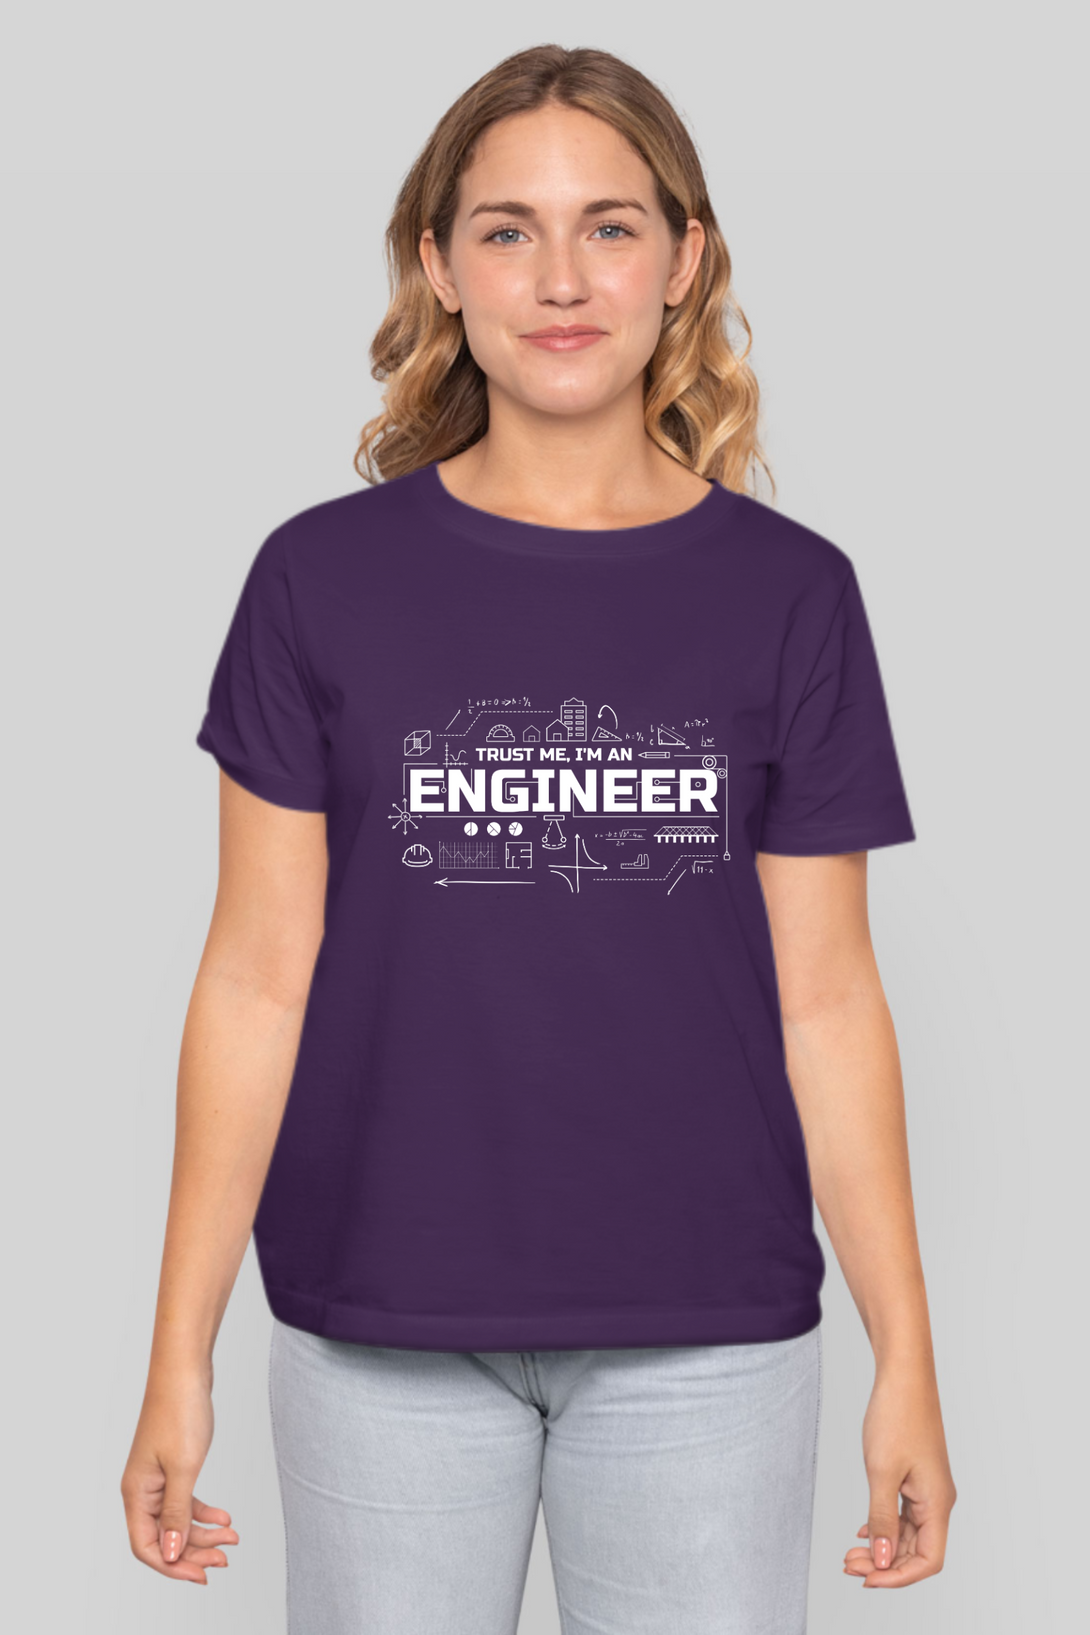 Trust Me, I'M An Engineer Printed T-Shirt For Women - WowWaves - 12